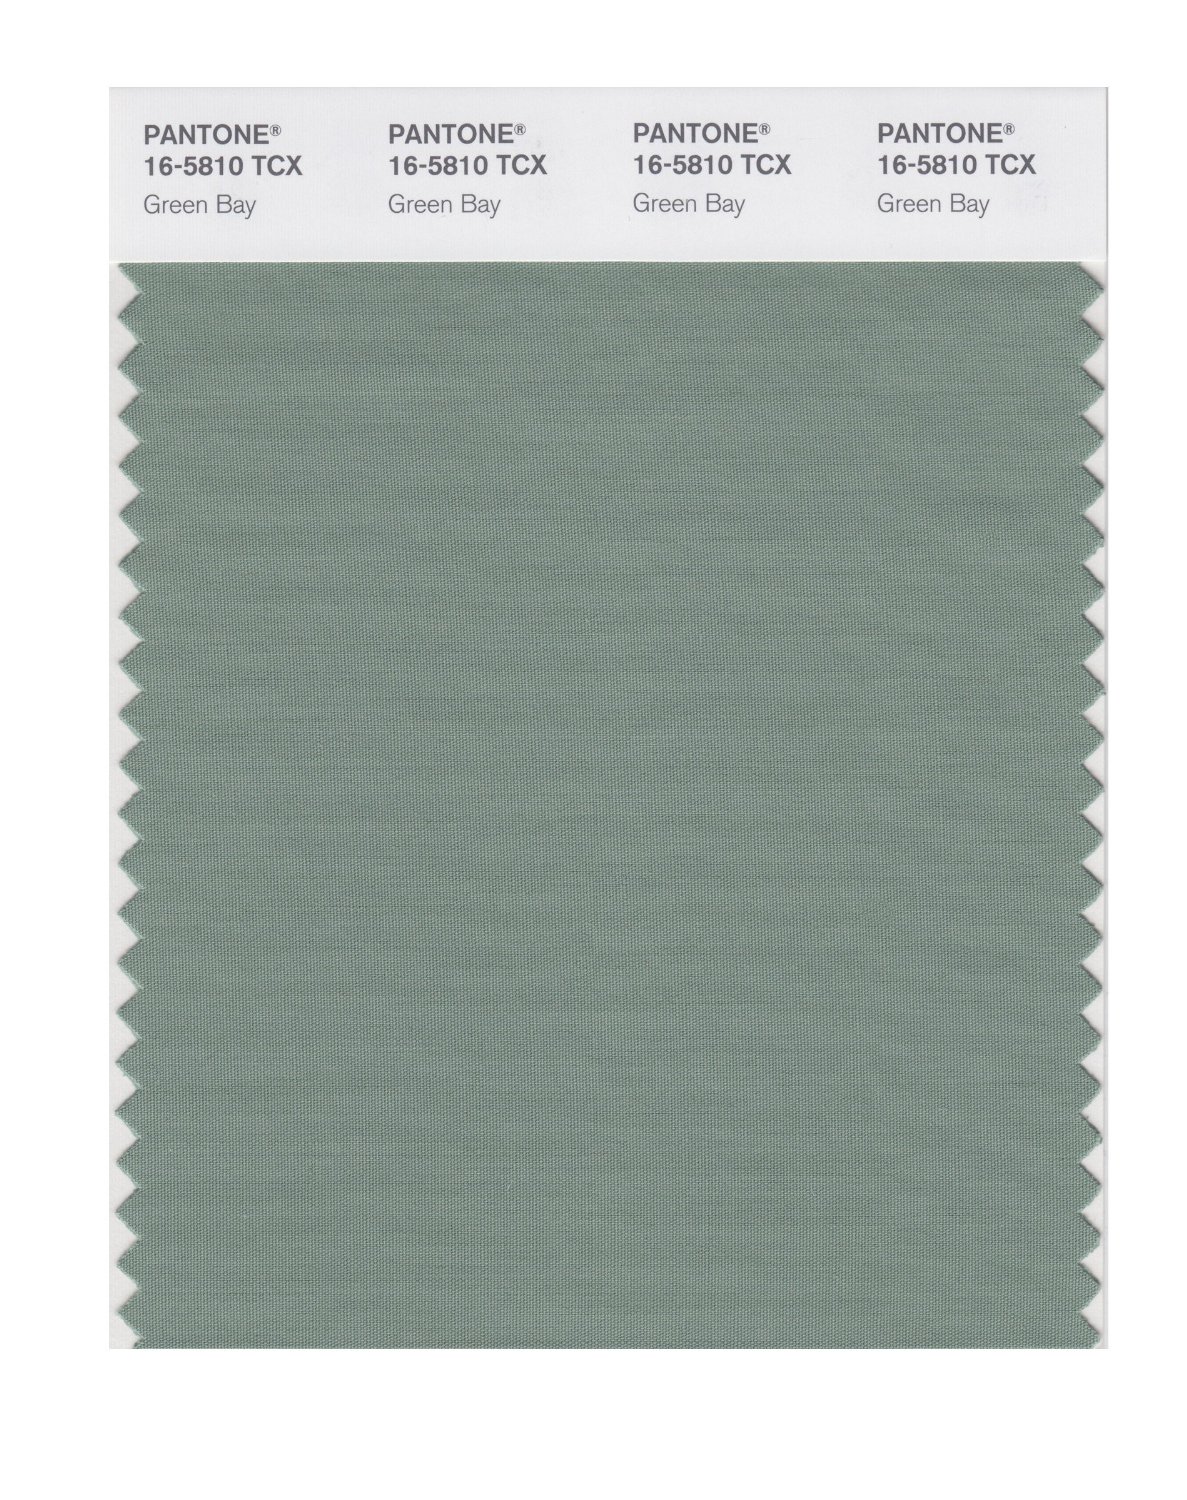 Pantone Cotton Swatch 16-5810 Green Bay